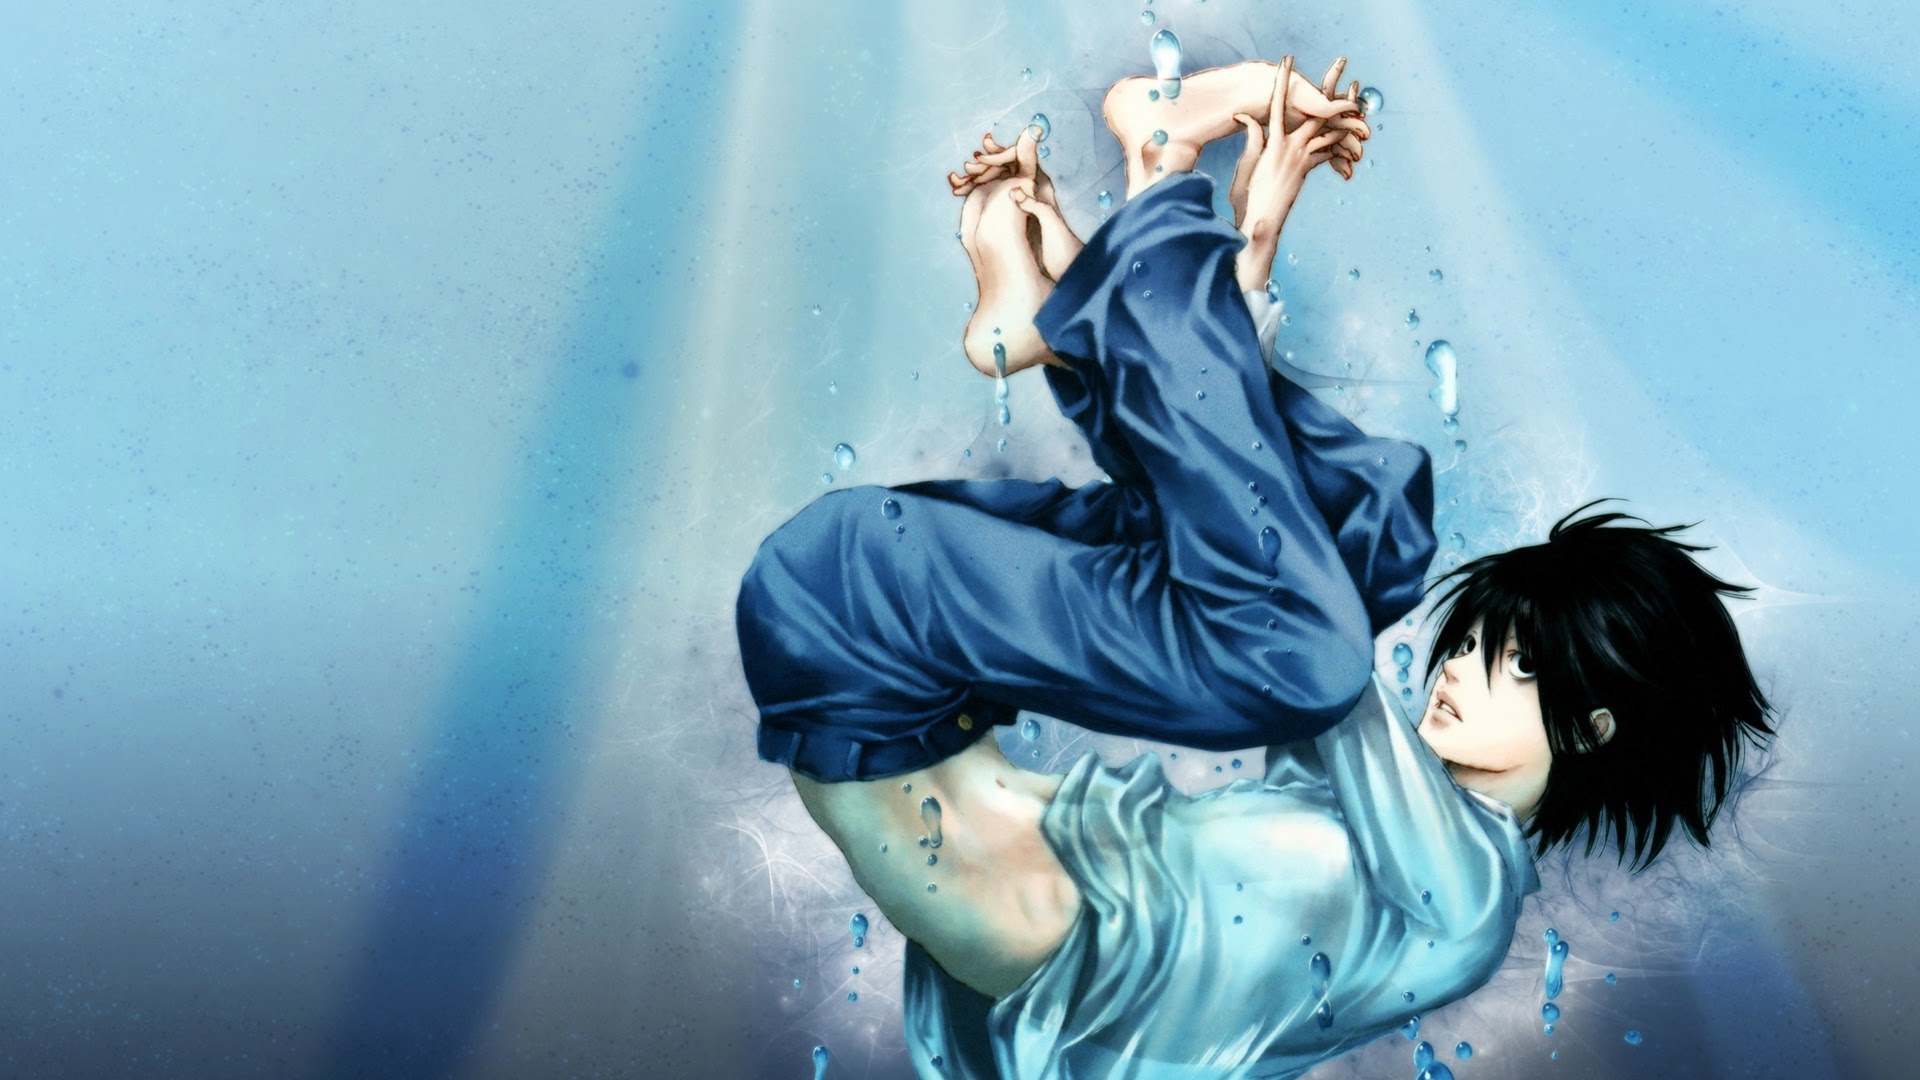 Death Note Anime Underwater Wallpaper Widescreen 8j